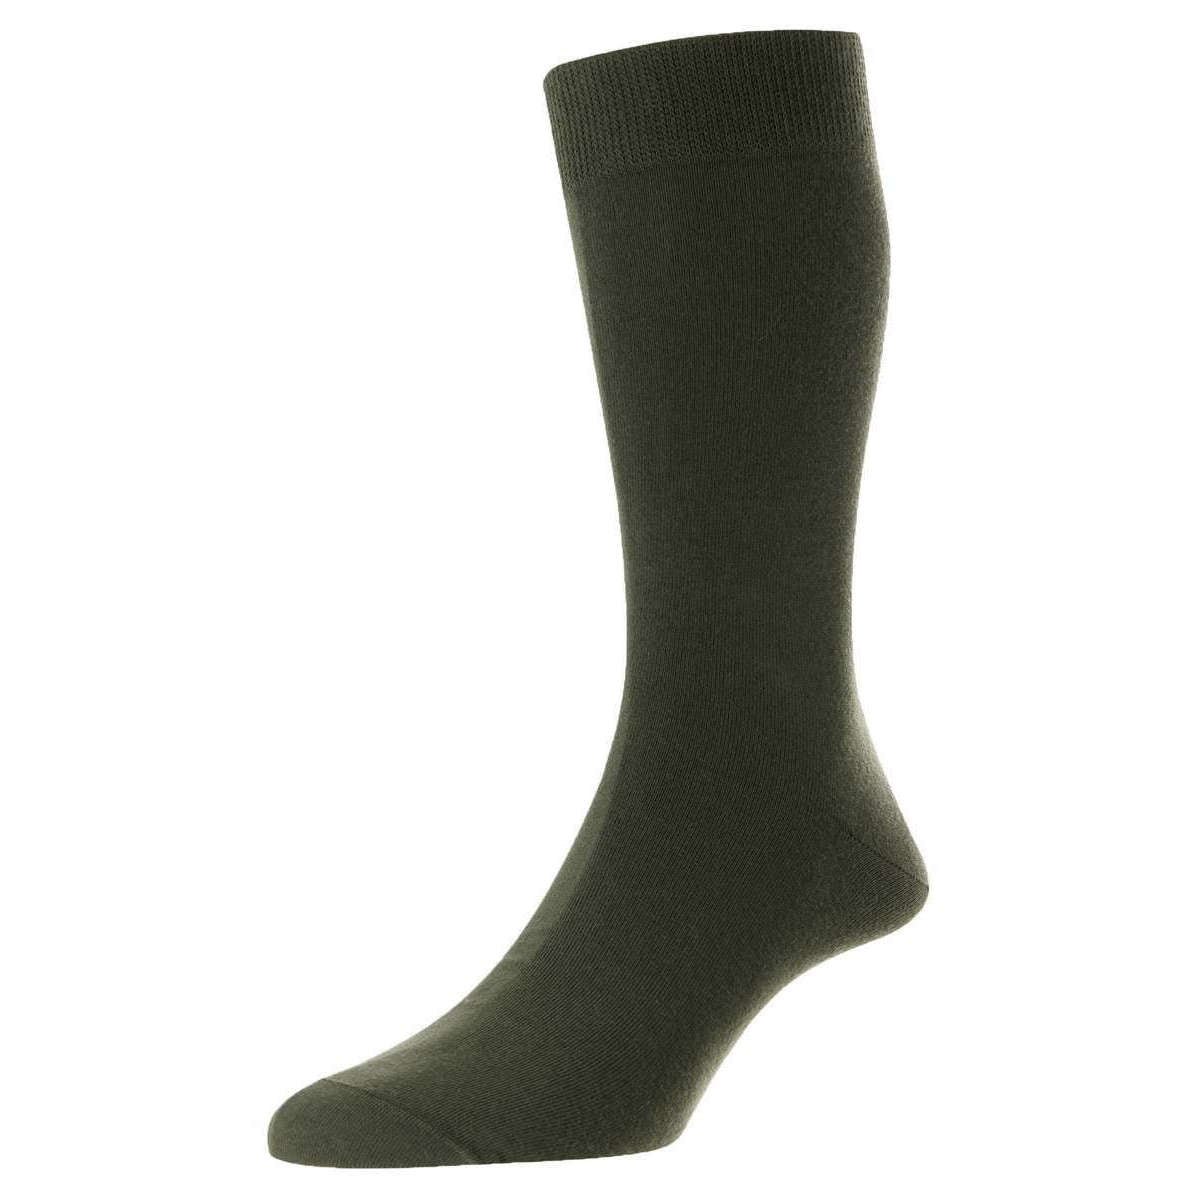 Pantherella Tavener Egyptian Cotton Socks - Dark Olive Green